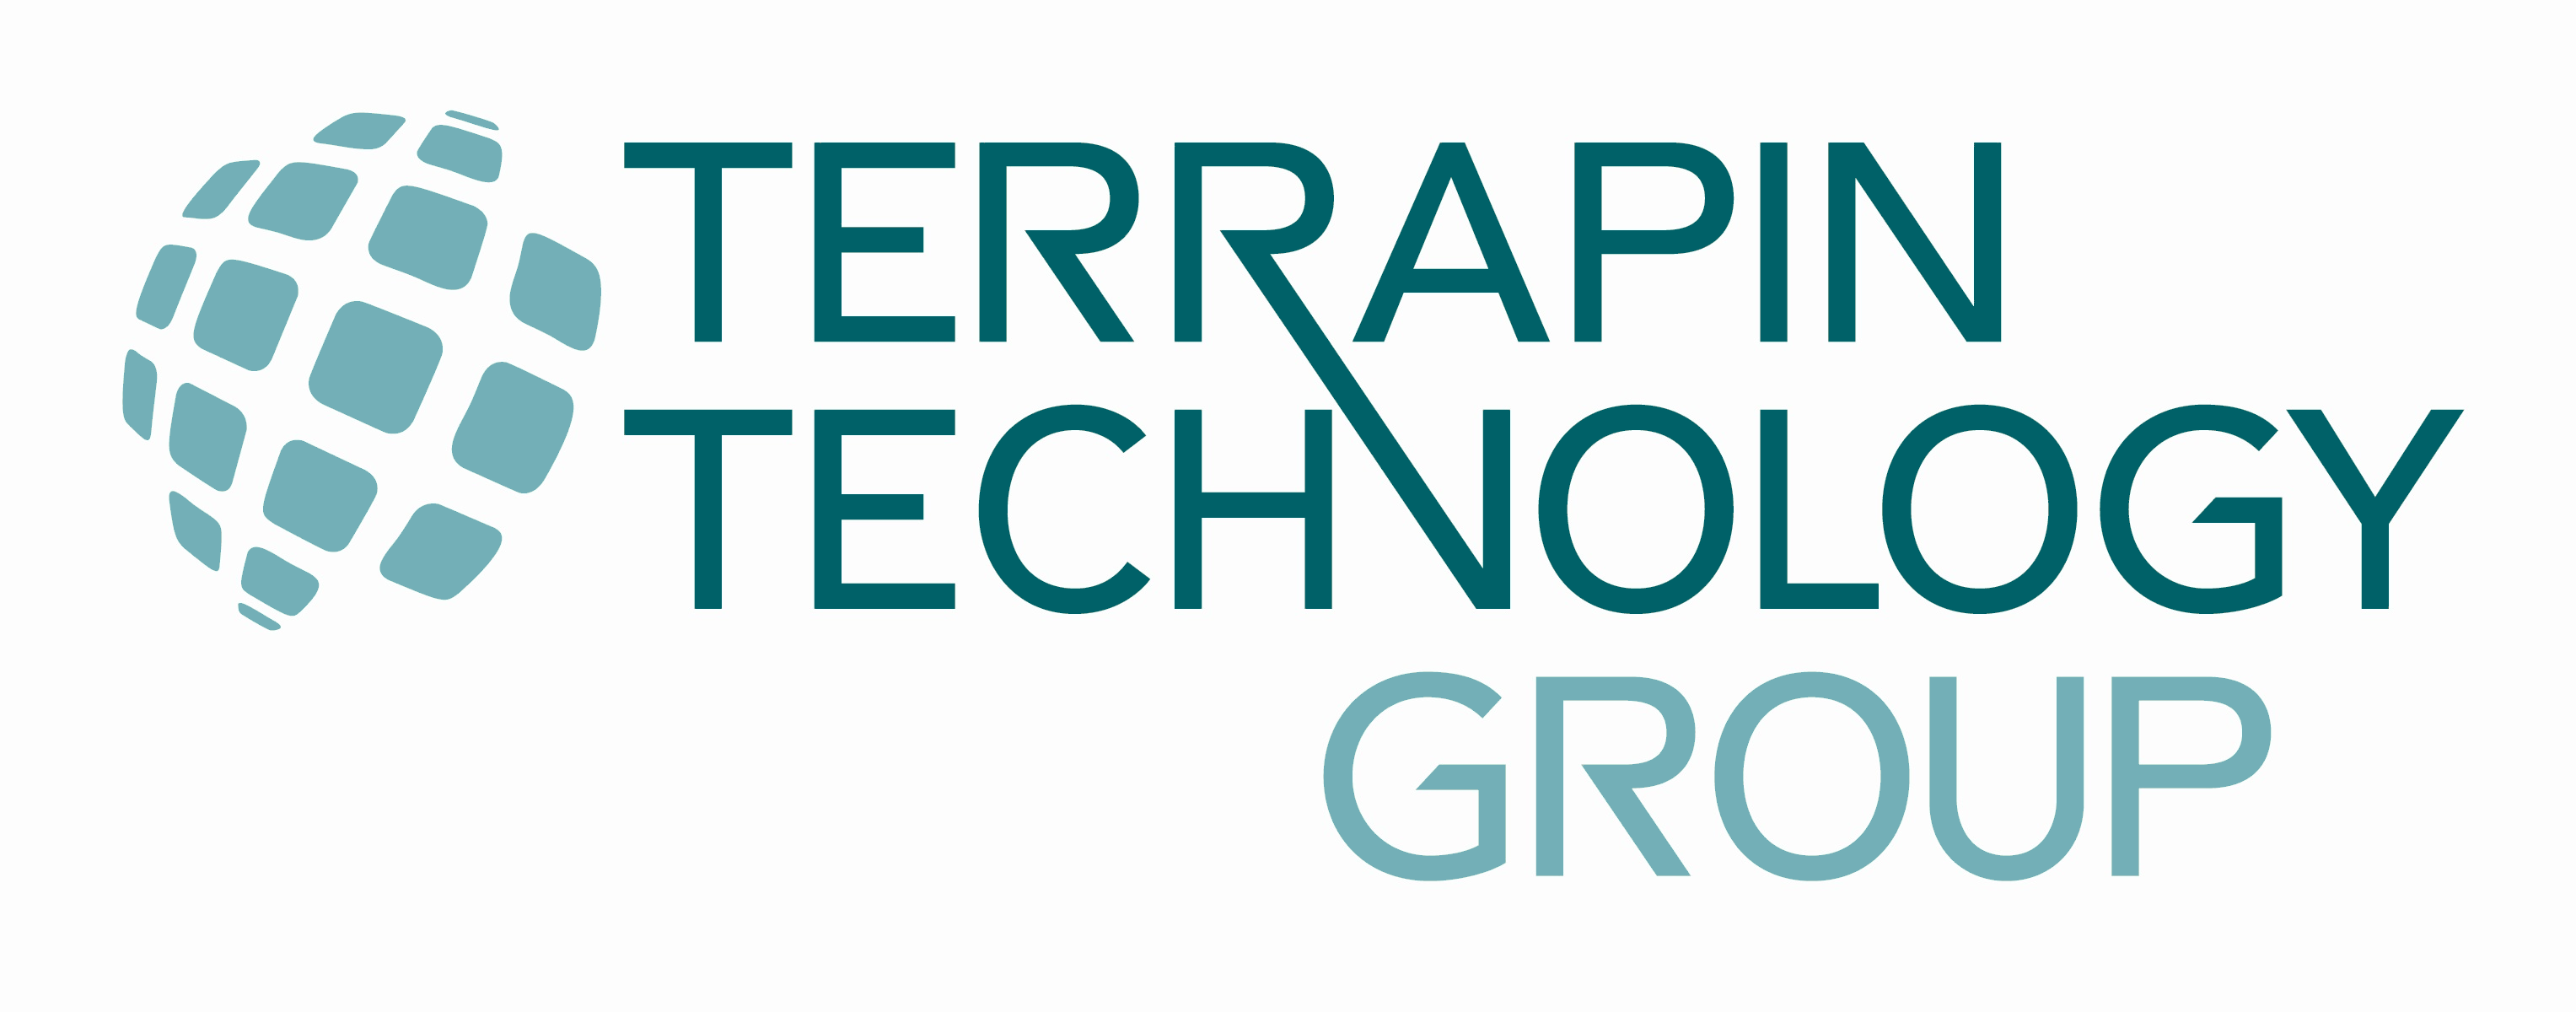 Terrapin Technologies logo